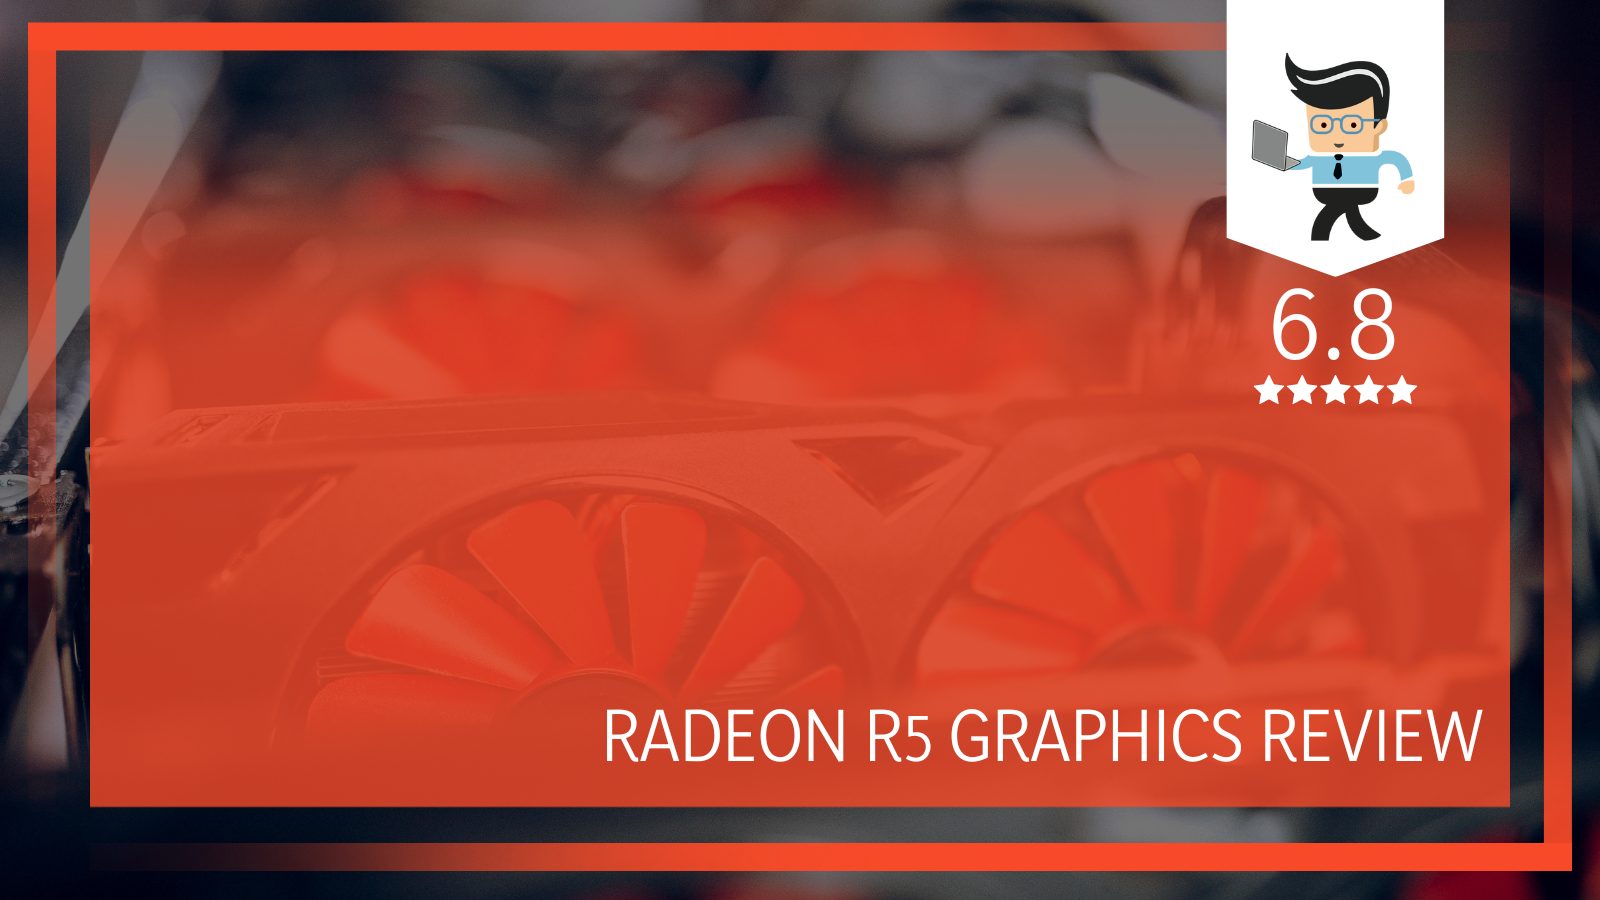 Radeon R5 Graphics Review